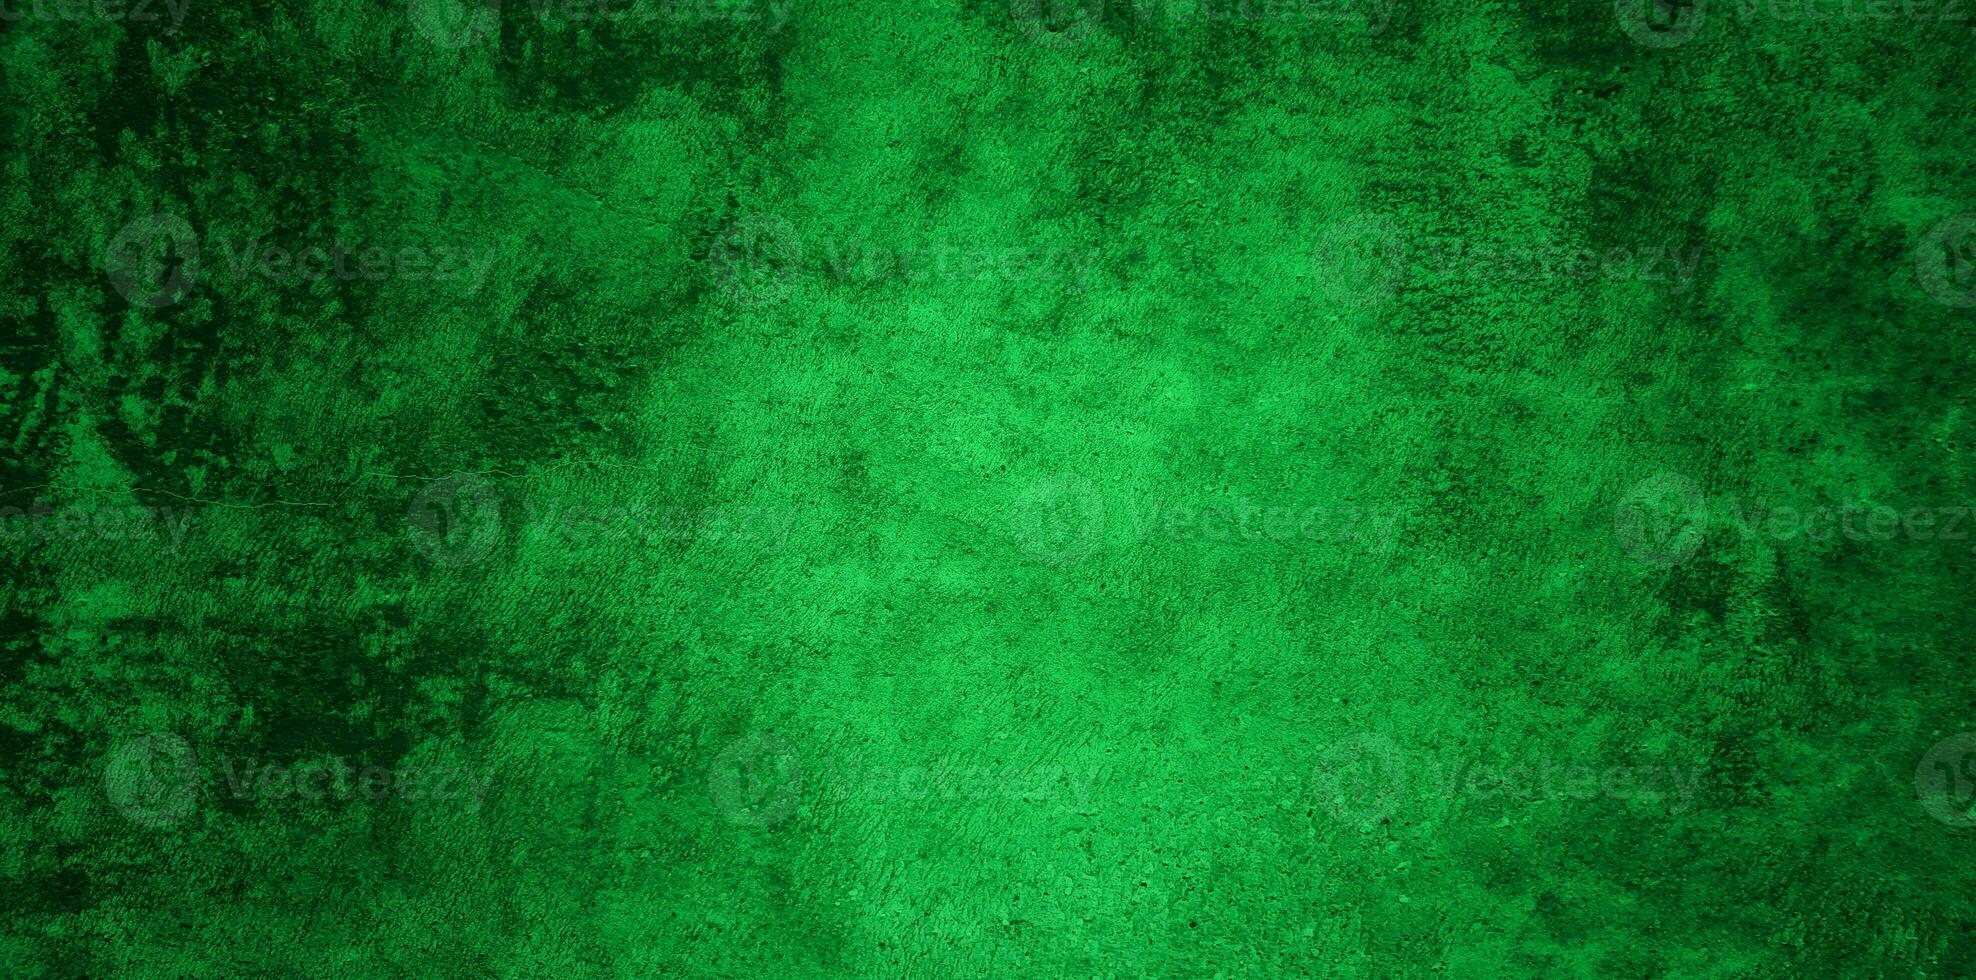 abstract grunge decoratief Verlichting donker groen stucwerk muur structuur breed hoek ruw gekleurde achtergrond foto